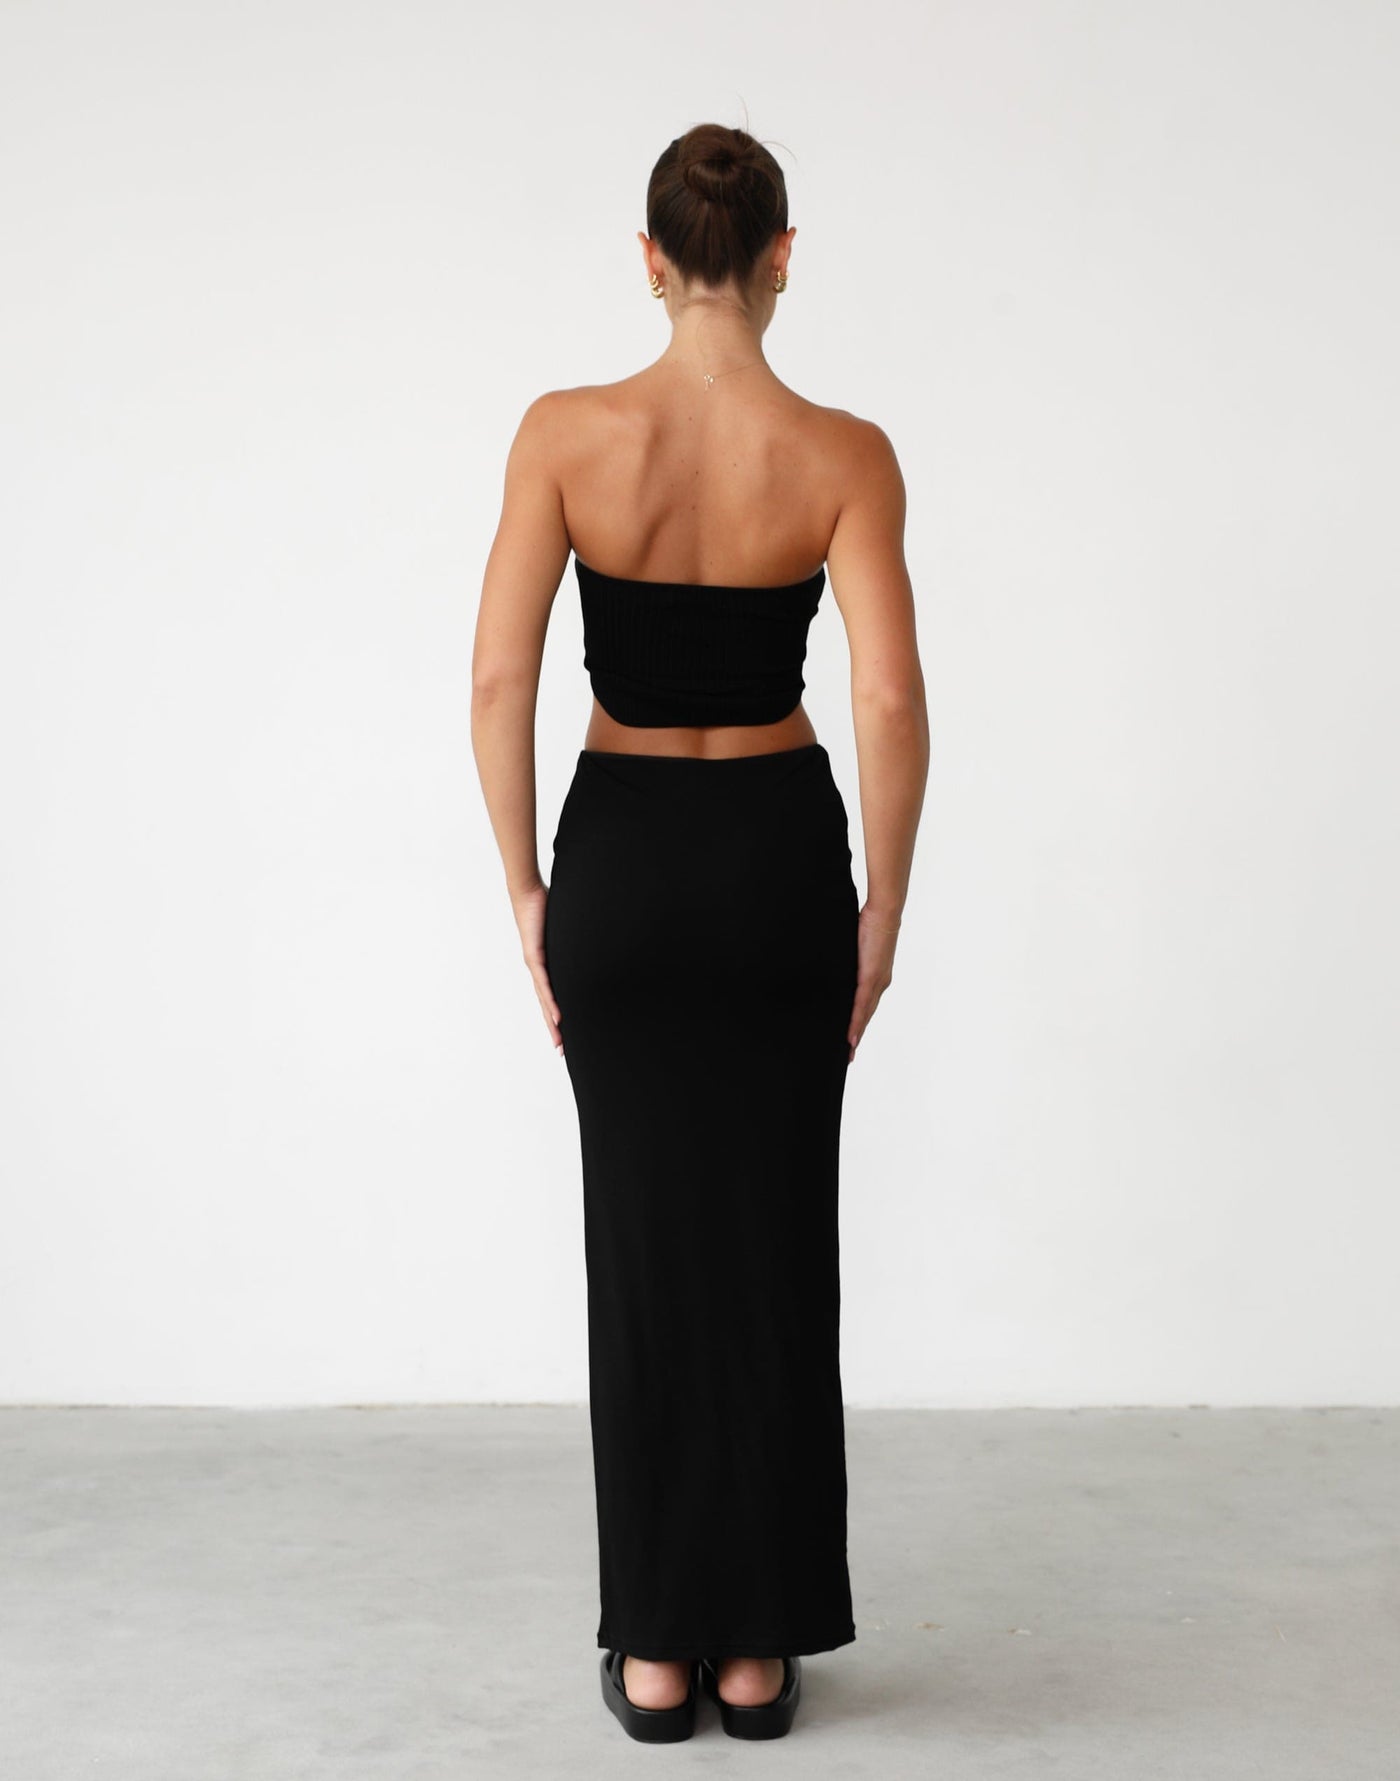 Adara Top (Black) - Black Strapless Crop Top - Women's Top - Charcoal Clothing